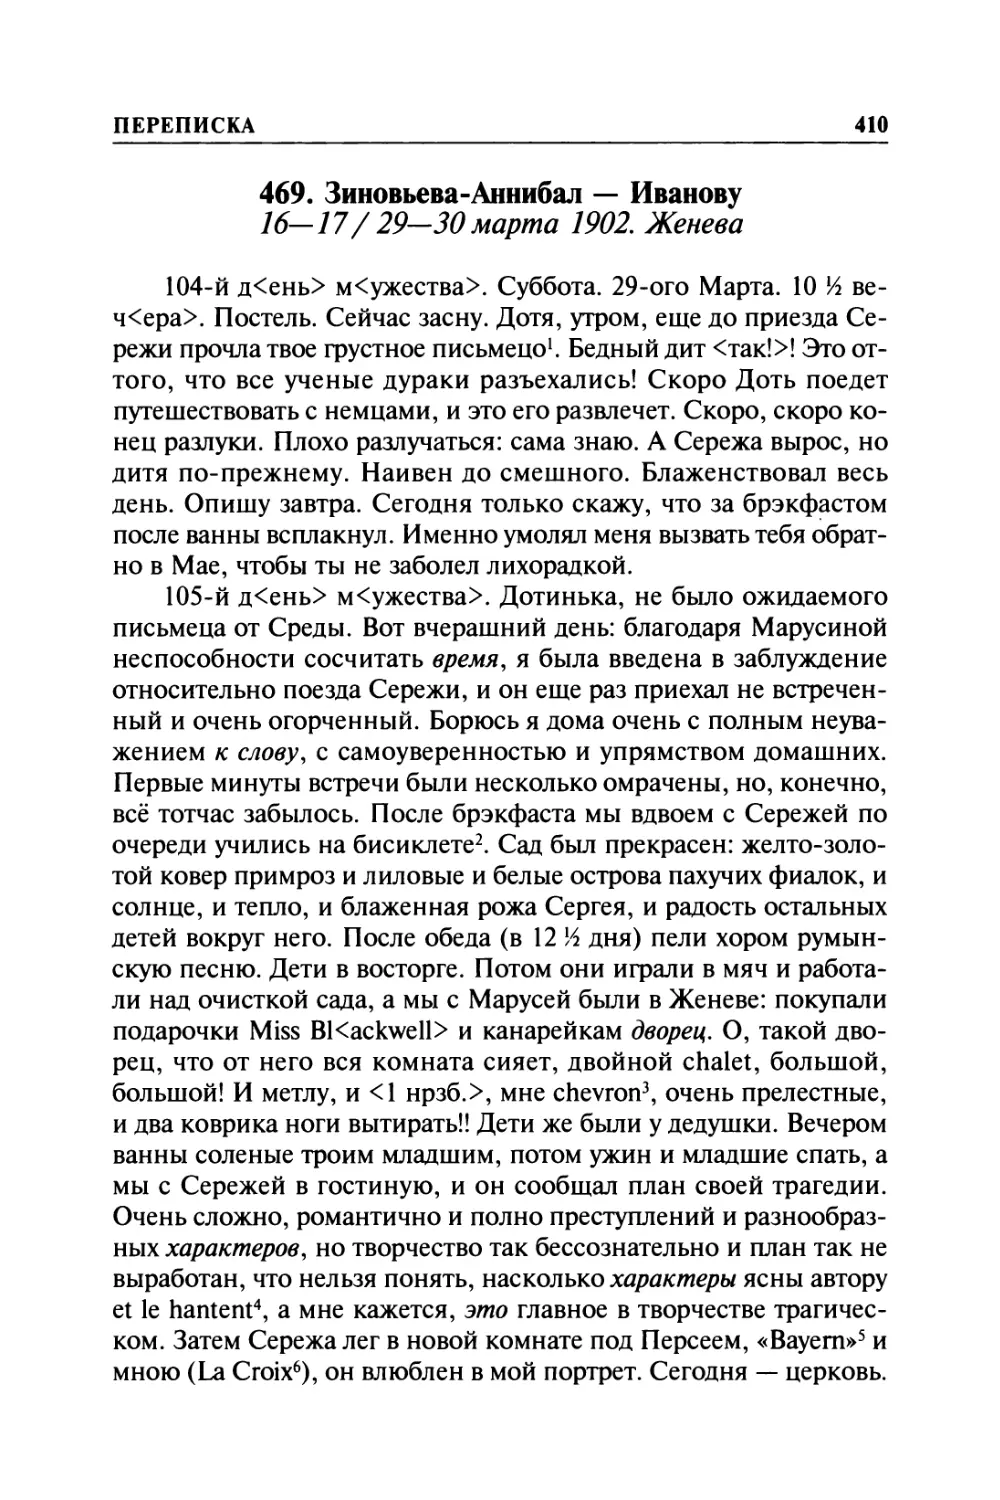 469. Зиновьева-Аннибал — Иванову. 16—17/ 29—30марта 1902. Женева